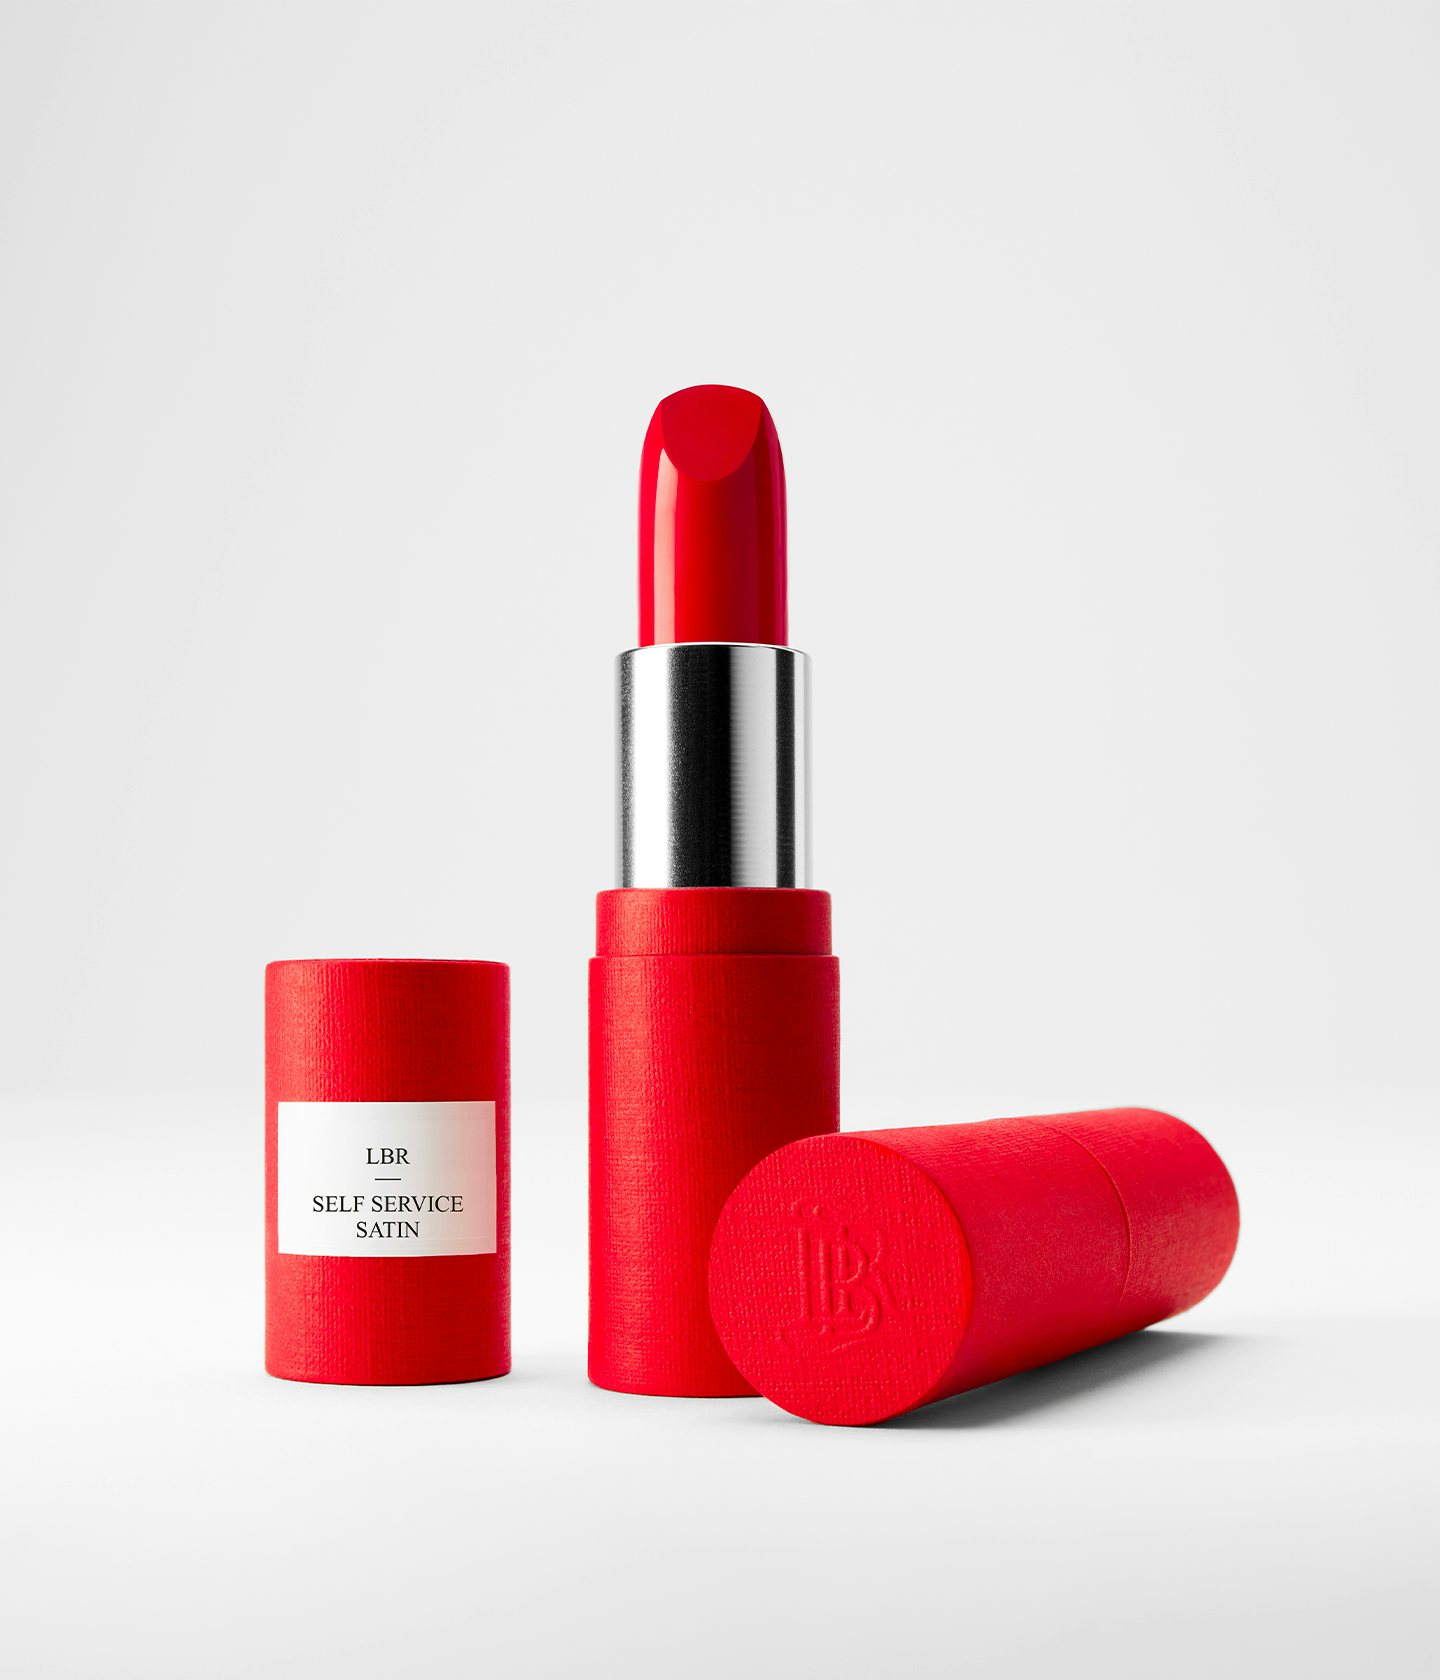 La bouche rouge Le Rouge Self Service Satin lipstick in the red paper case